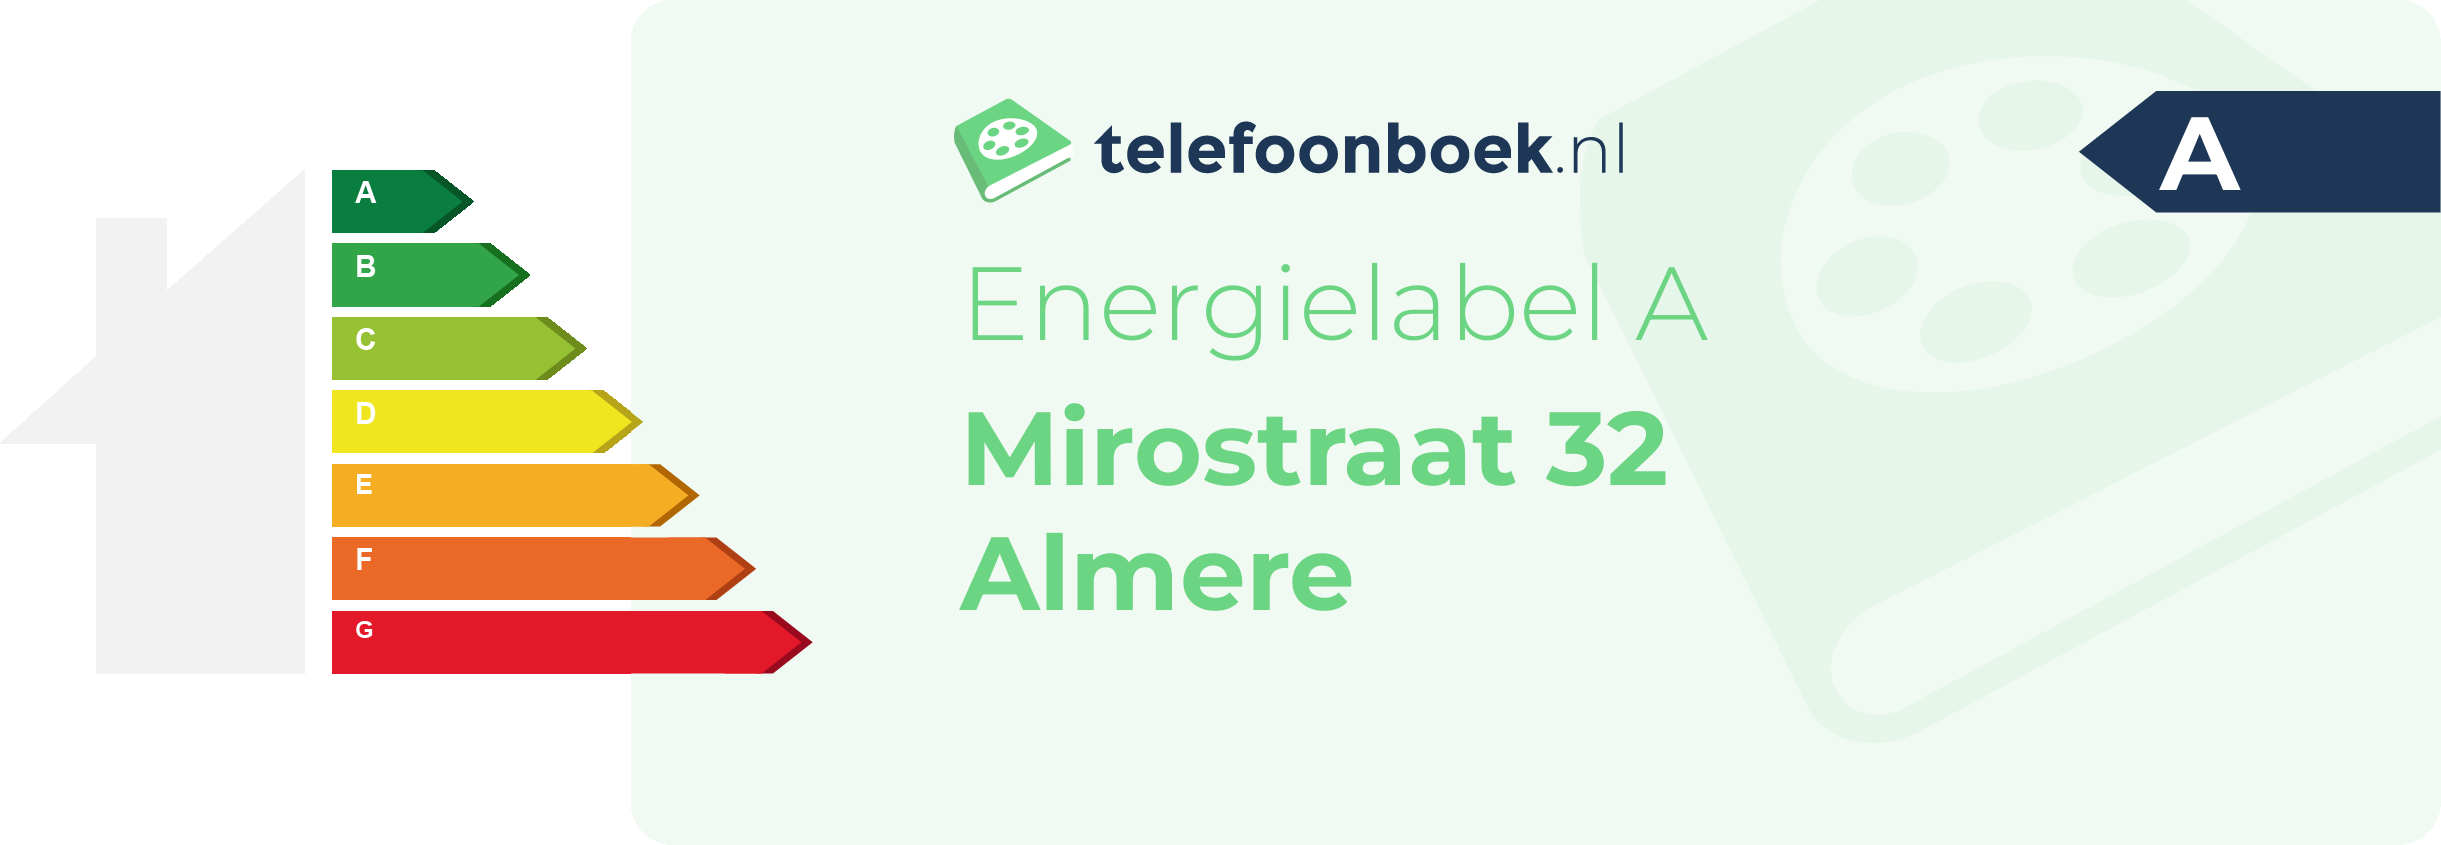 Energielabel Mirostraat 32 Almere